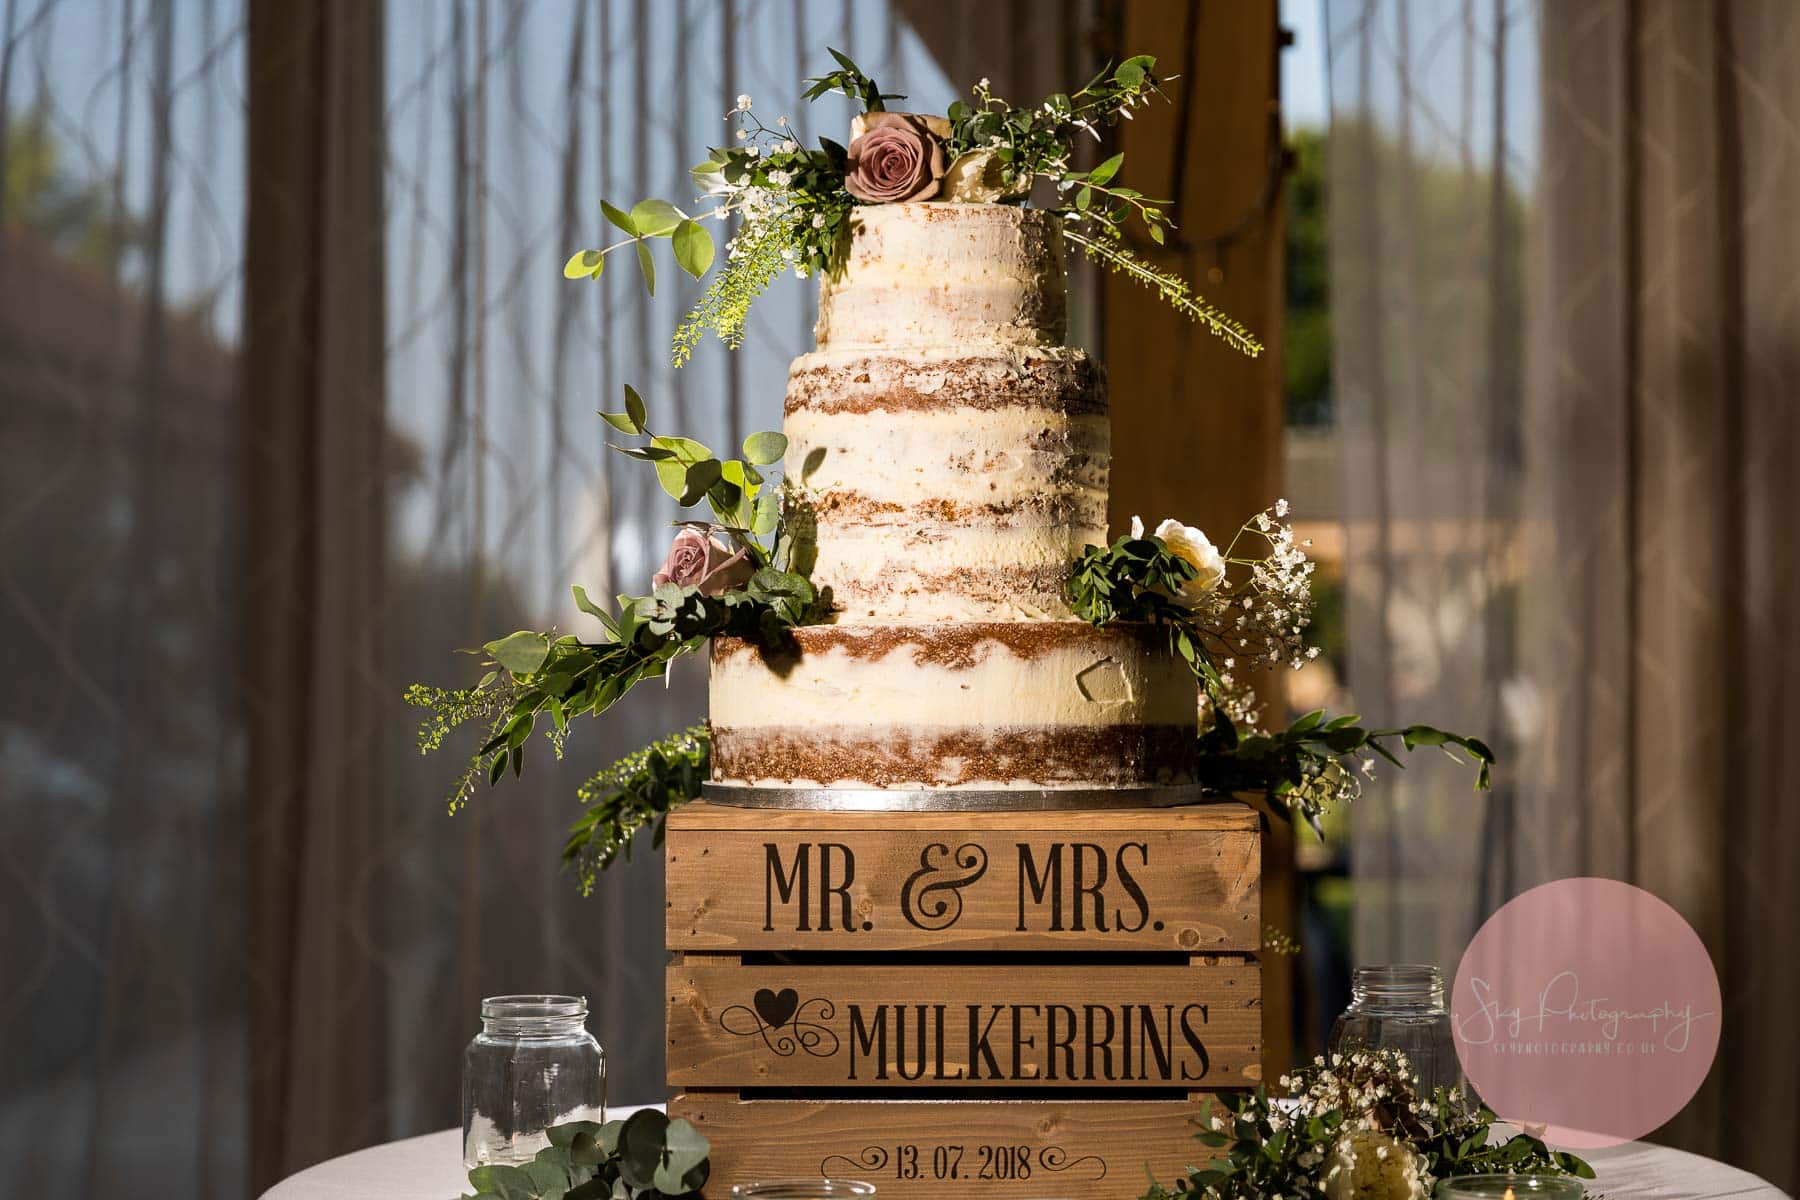 Stunning 3 tiered naked wedding cake